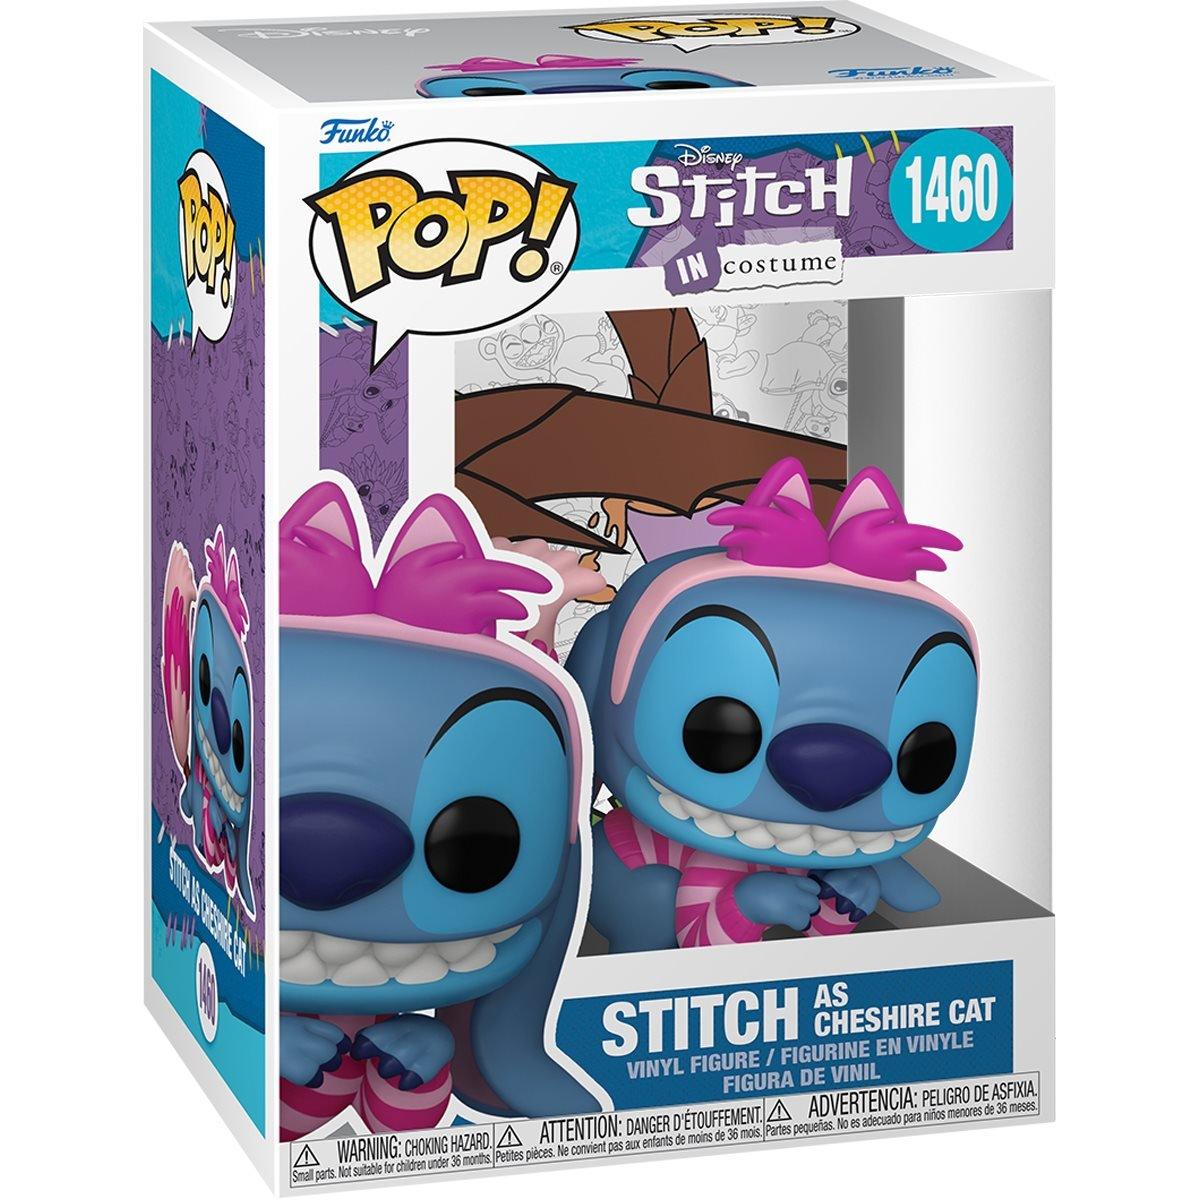 Lilo & Stitch - Costume Stitch as Cheshire Cat Pop! Vinyl